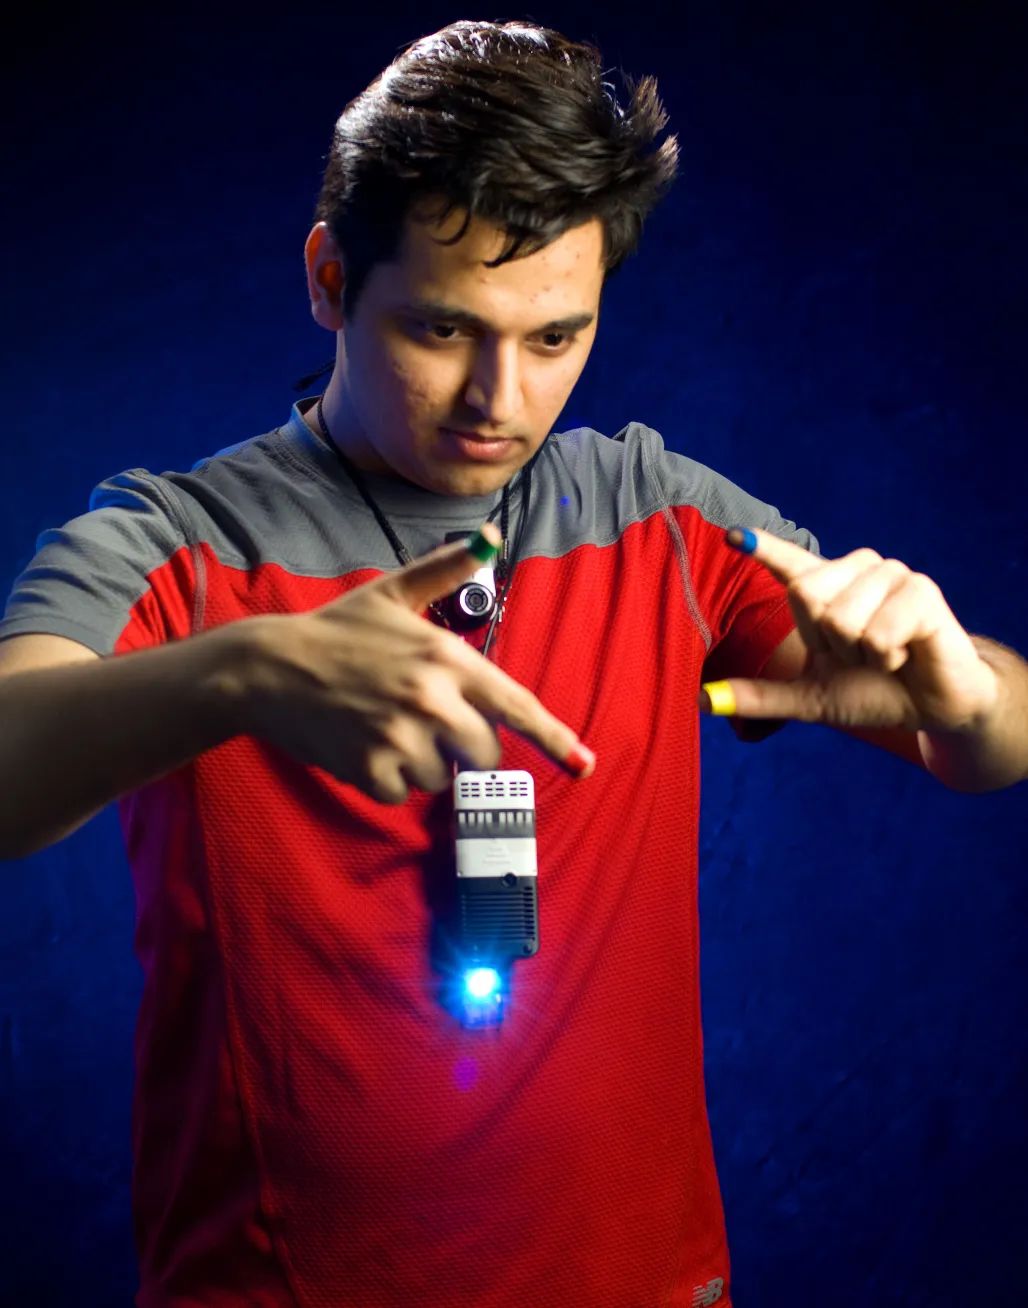 2012 年，Pranav Mistry 佩戴了一個類似的設備，他與Maes和Chang將其命名為“WUW”，為“Wear yoUr World”